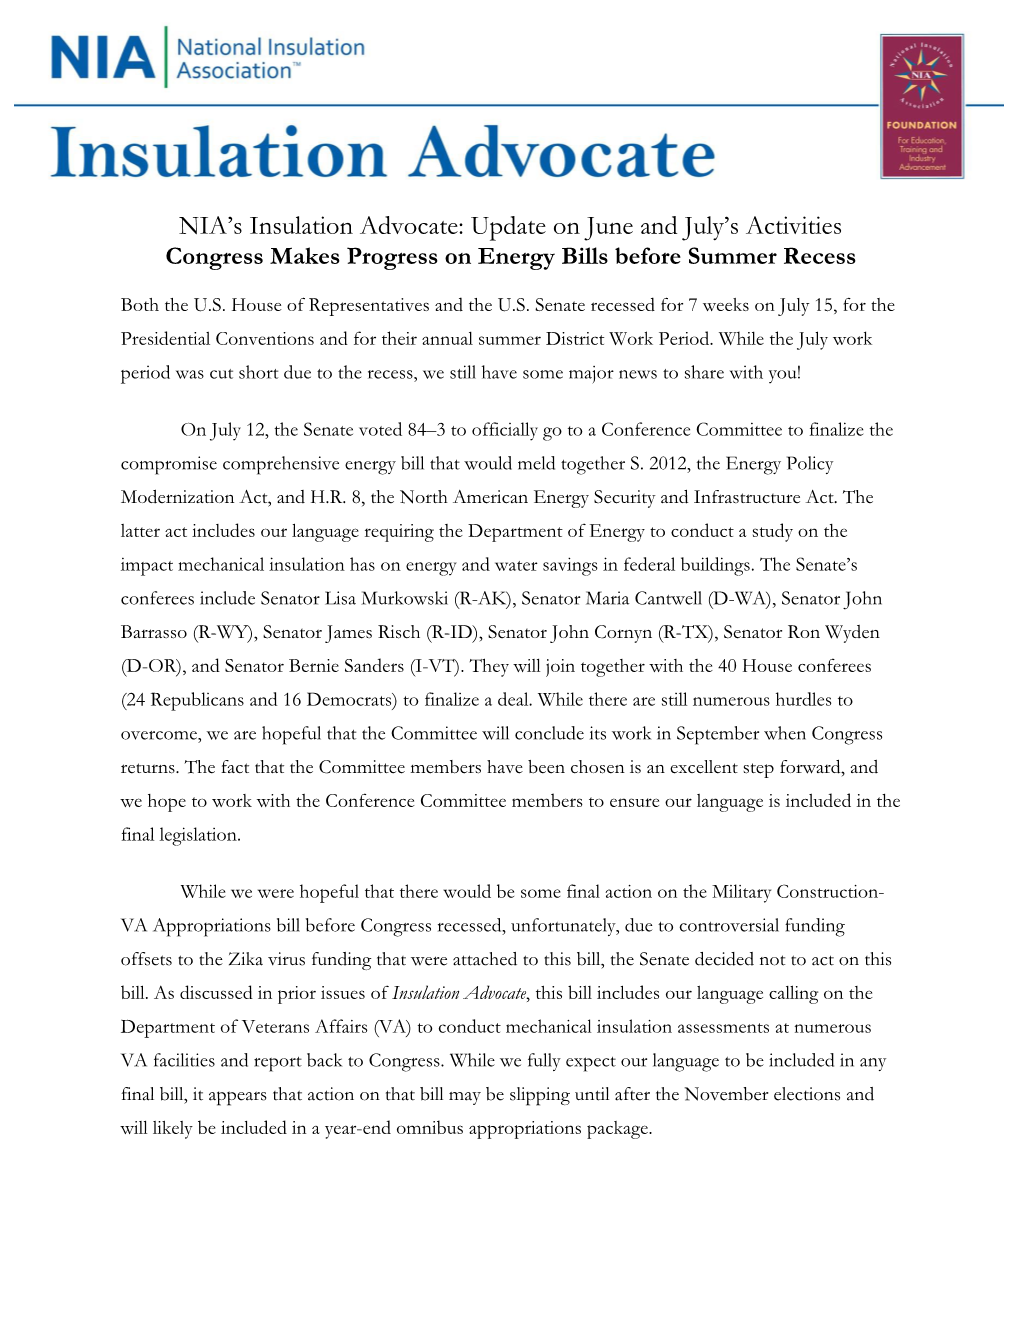 NIA's Insulation Advocate